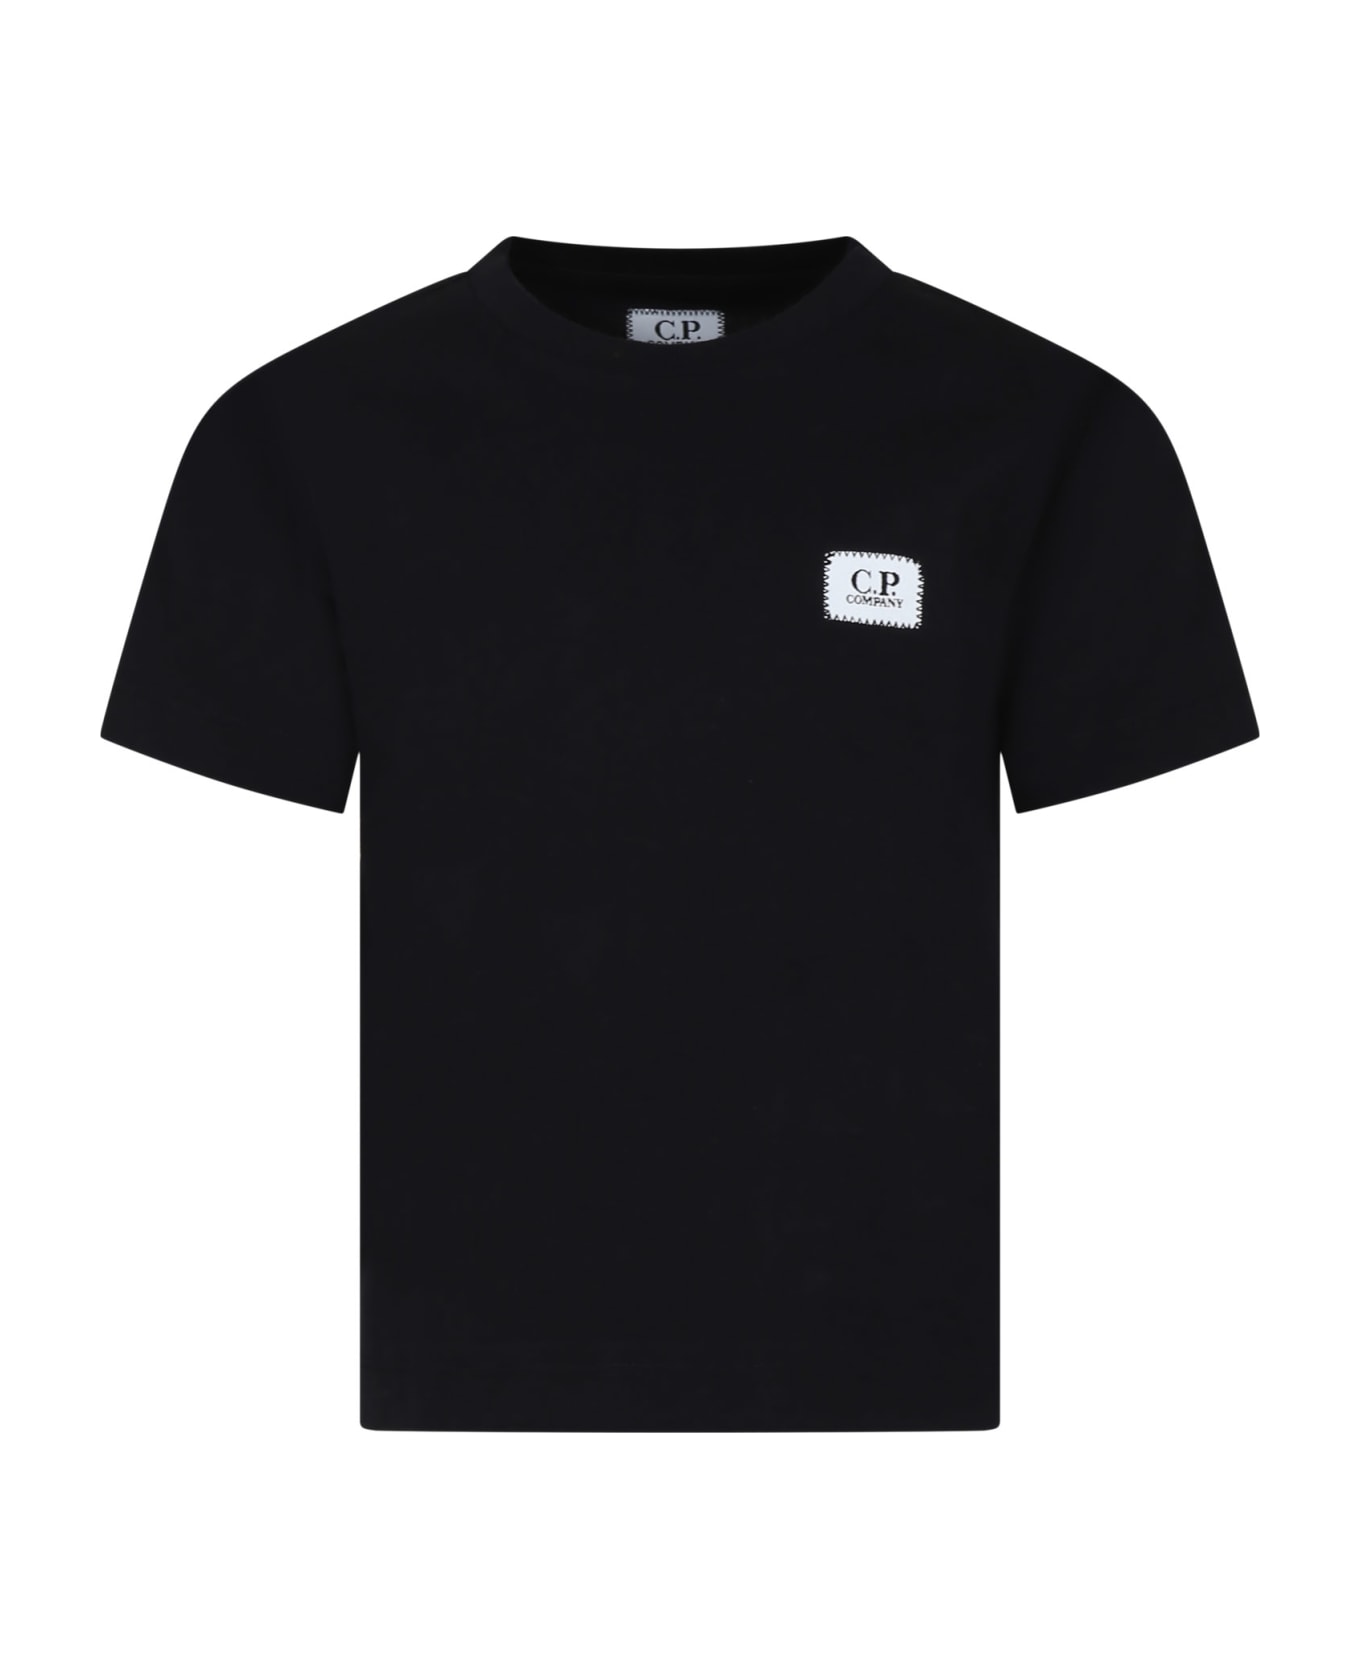 C.P. Company Undersixteen Black T-shirt For Boy With Logo - Black